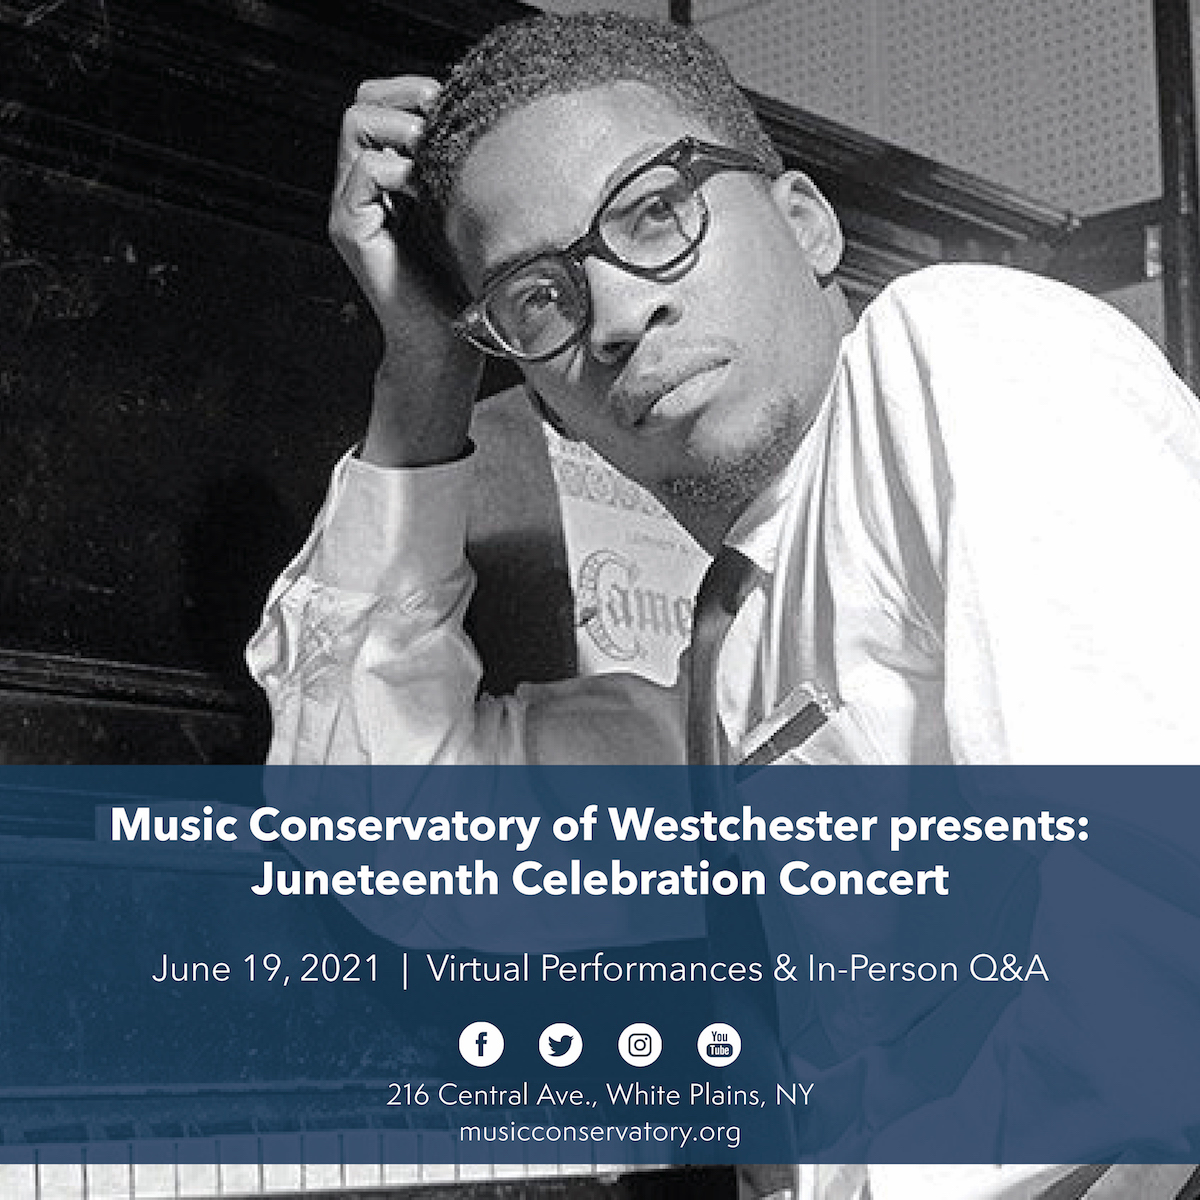 Music Conservatory of Westchester Presents Celebration